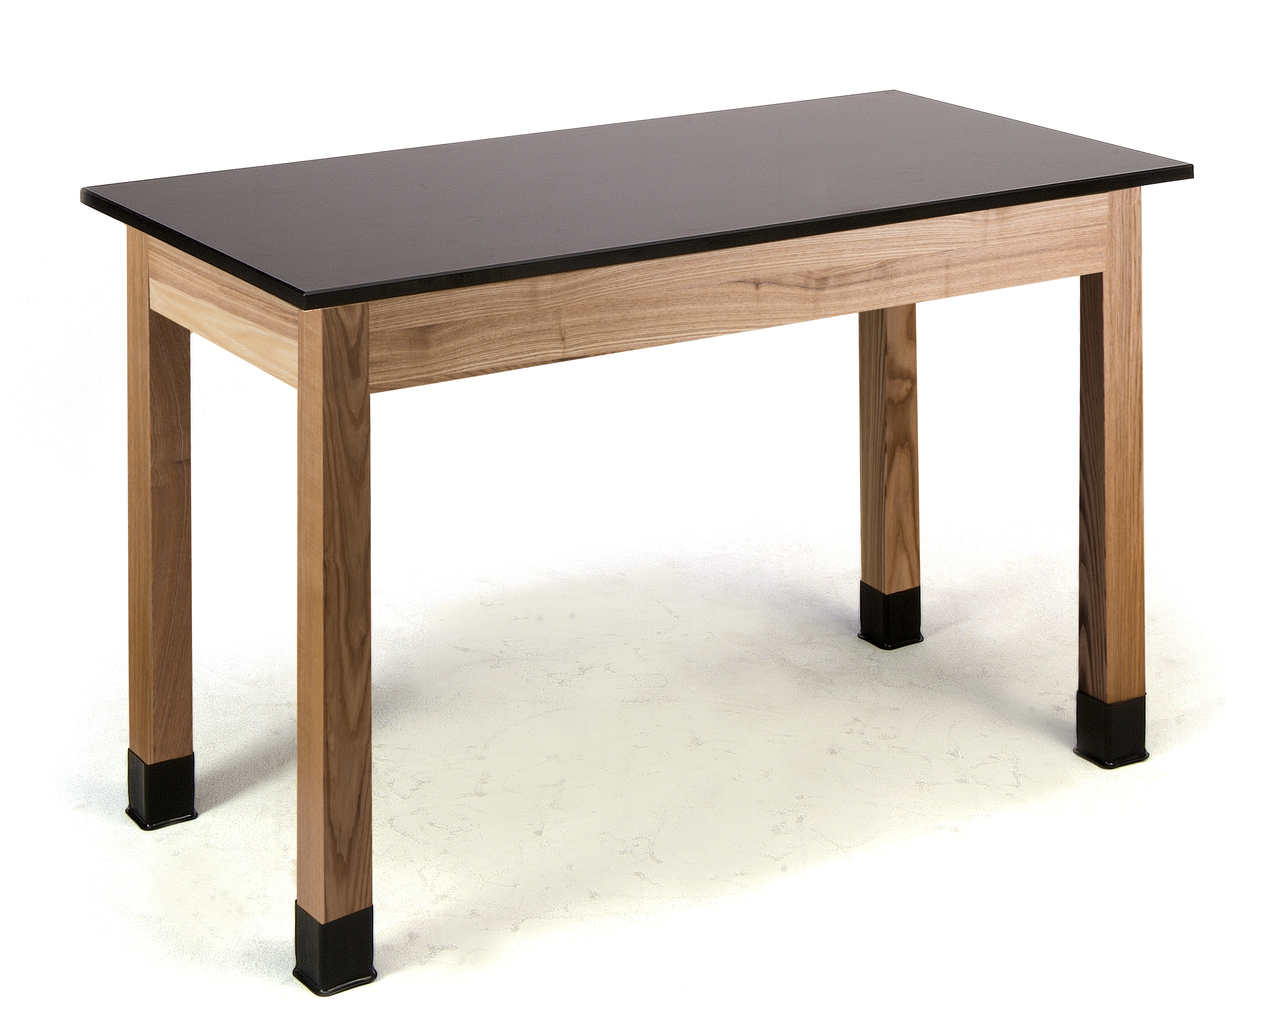 NPS Wood Science Lab Table -  42"x60"x30" -  Phenolic Top - Black Top and Ash Leg